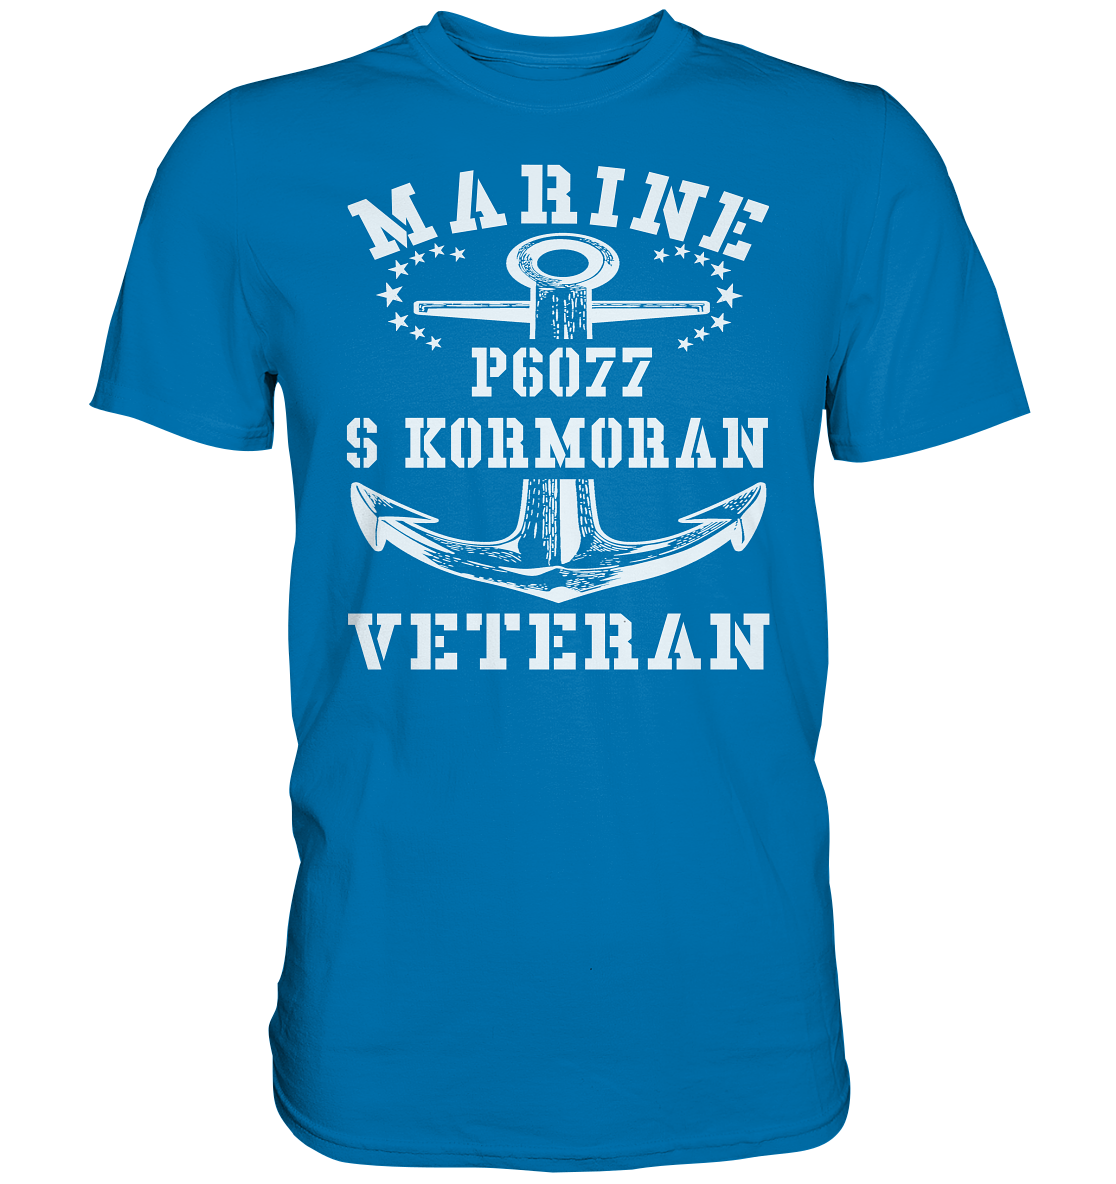 P6077 S KORMORAN Marine Veteran - Premium Shirt